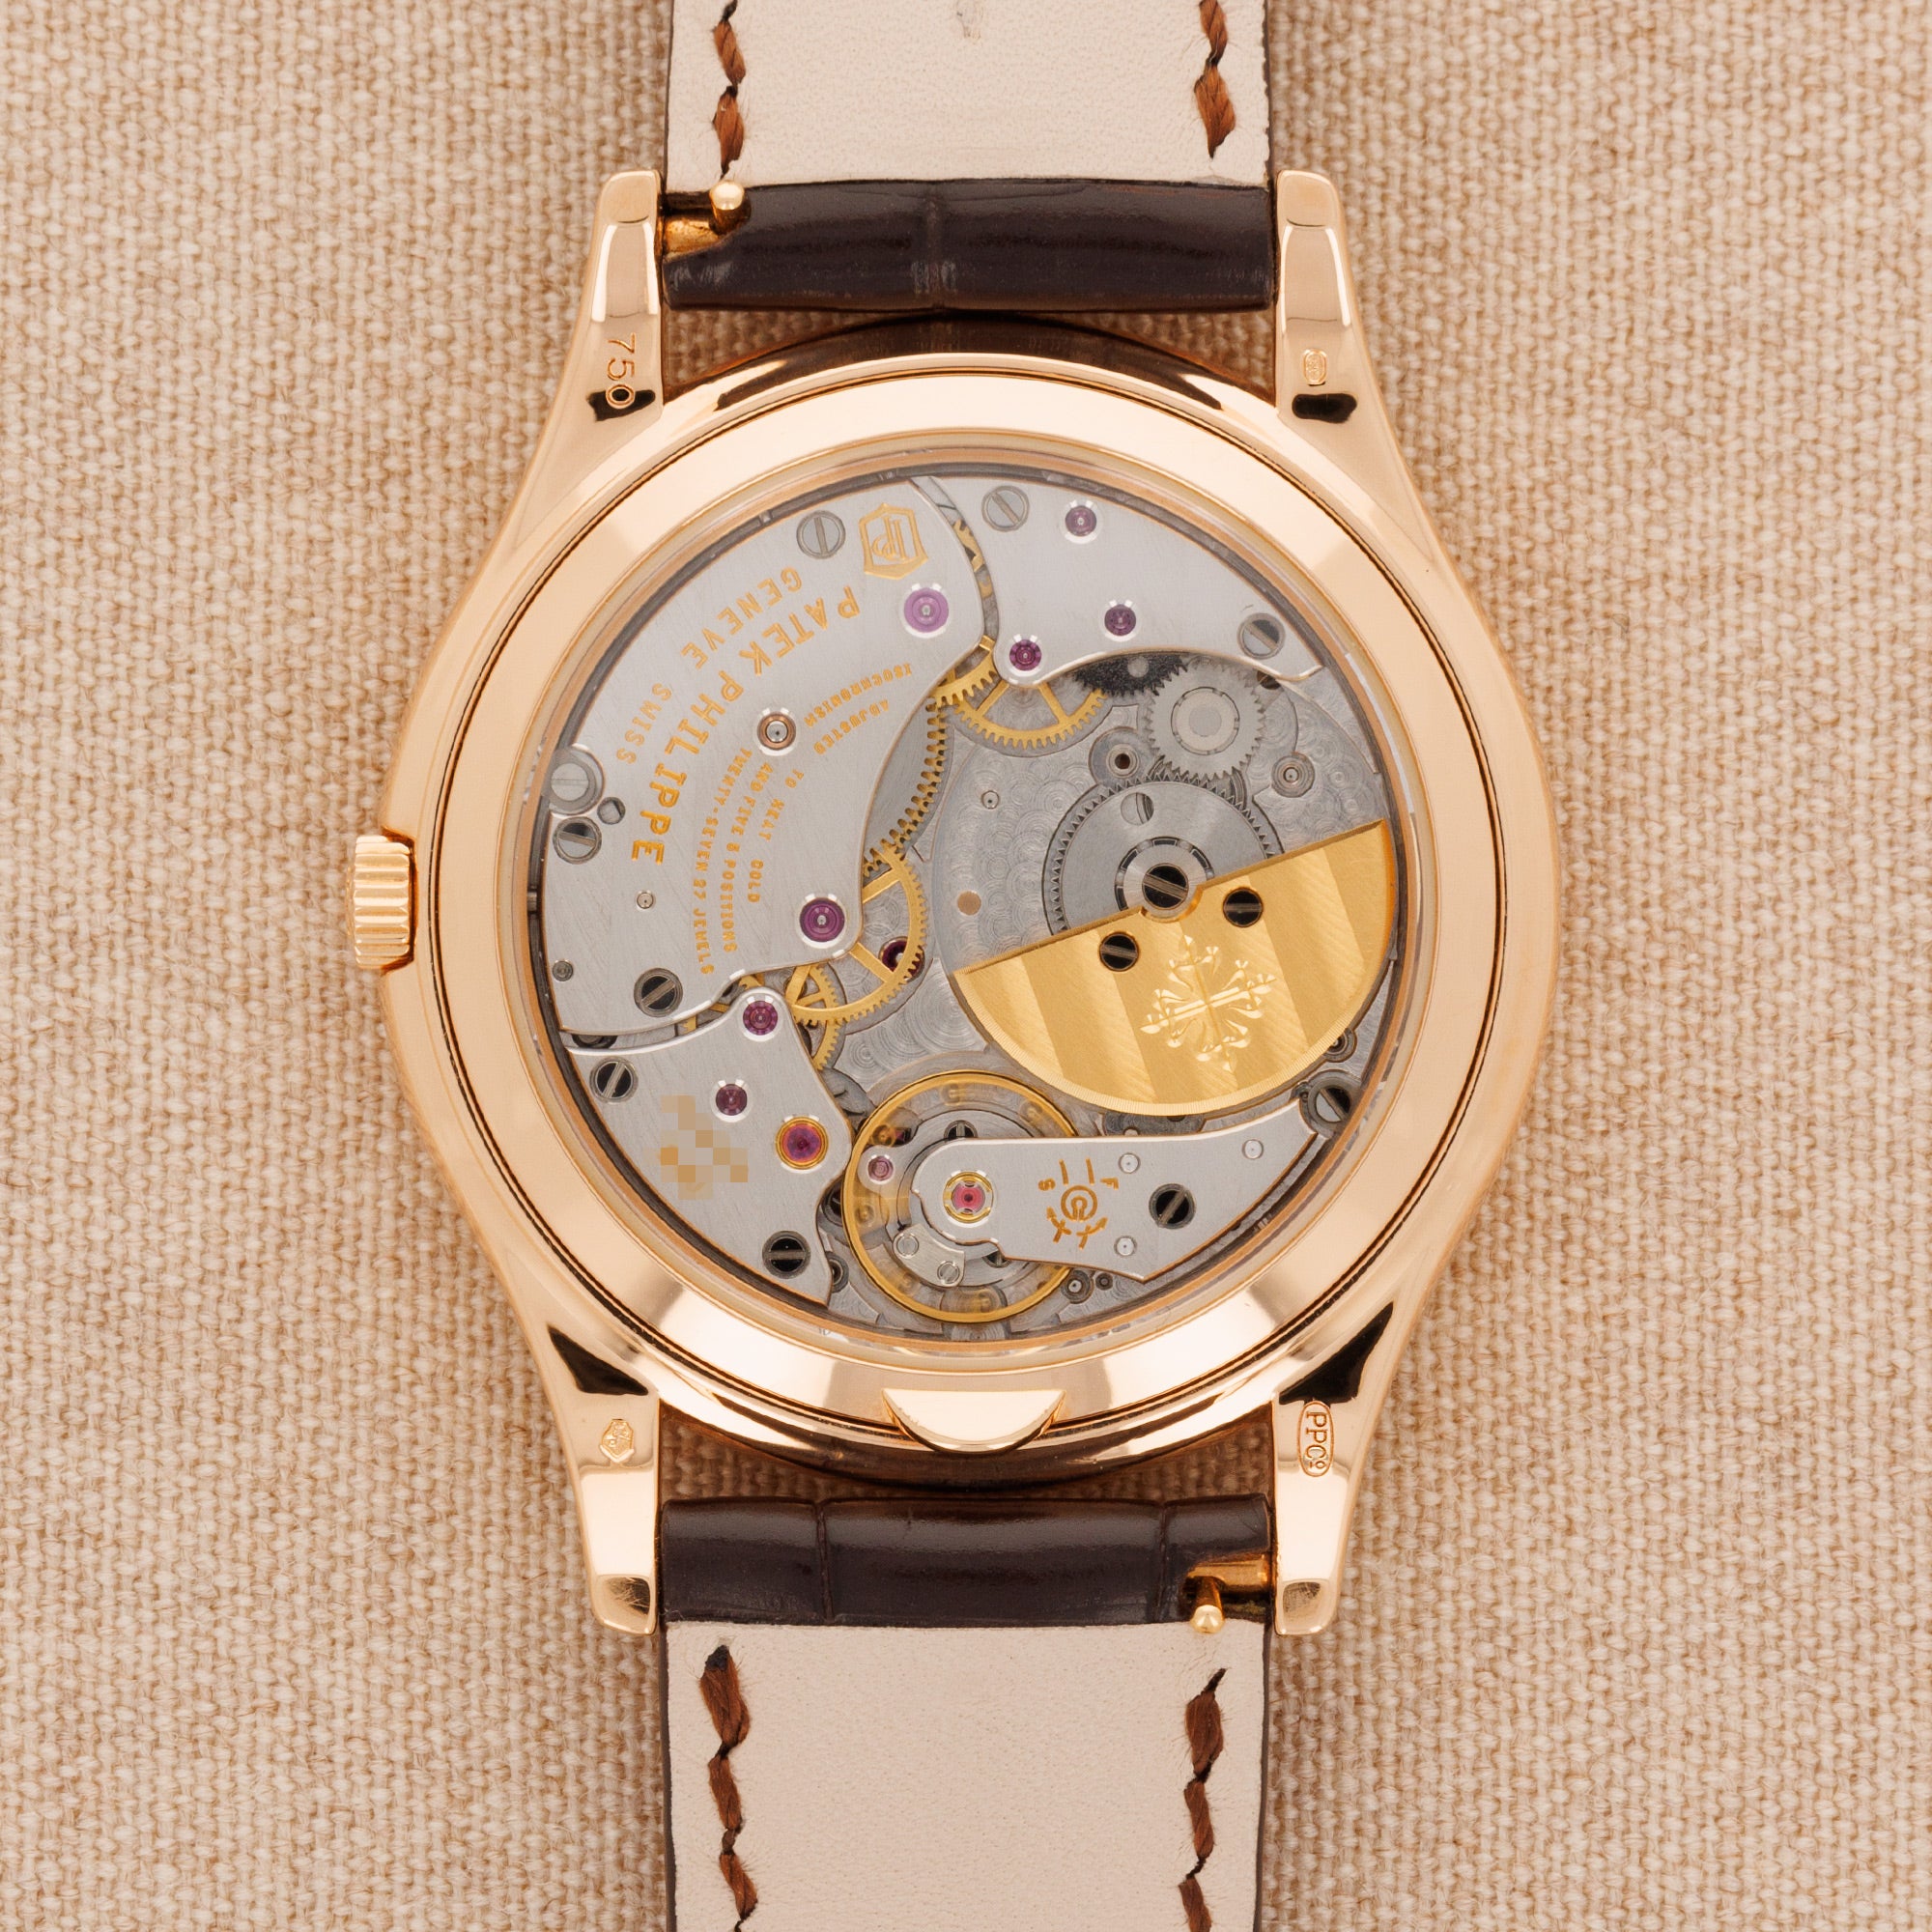 Patek Philippe - Patek Philippe Rose Gold Perpetual Calendar Ref. 5140 - The Keystone Watches